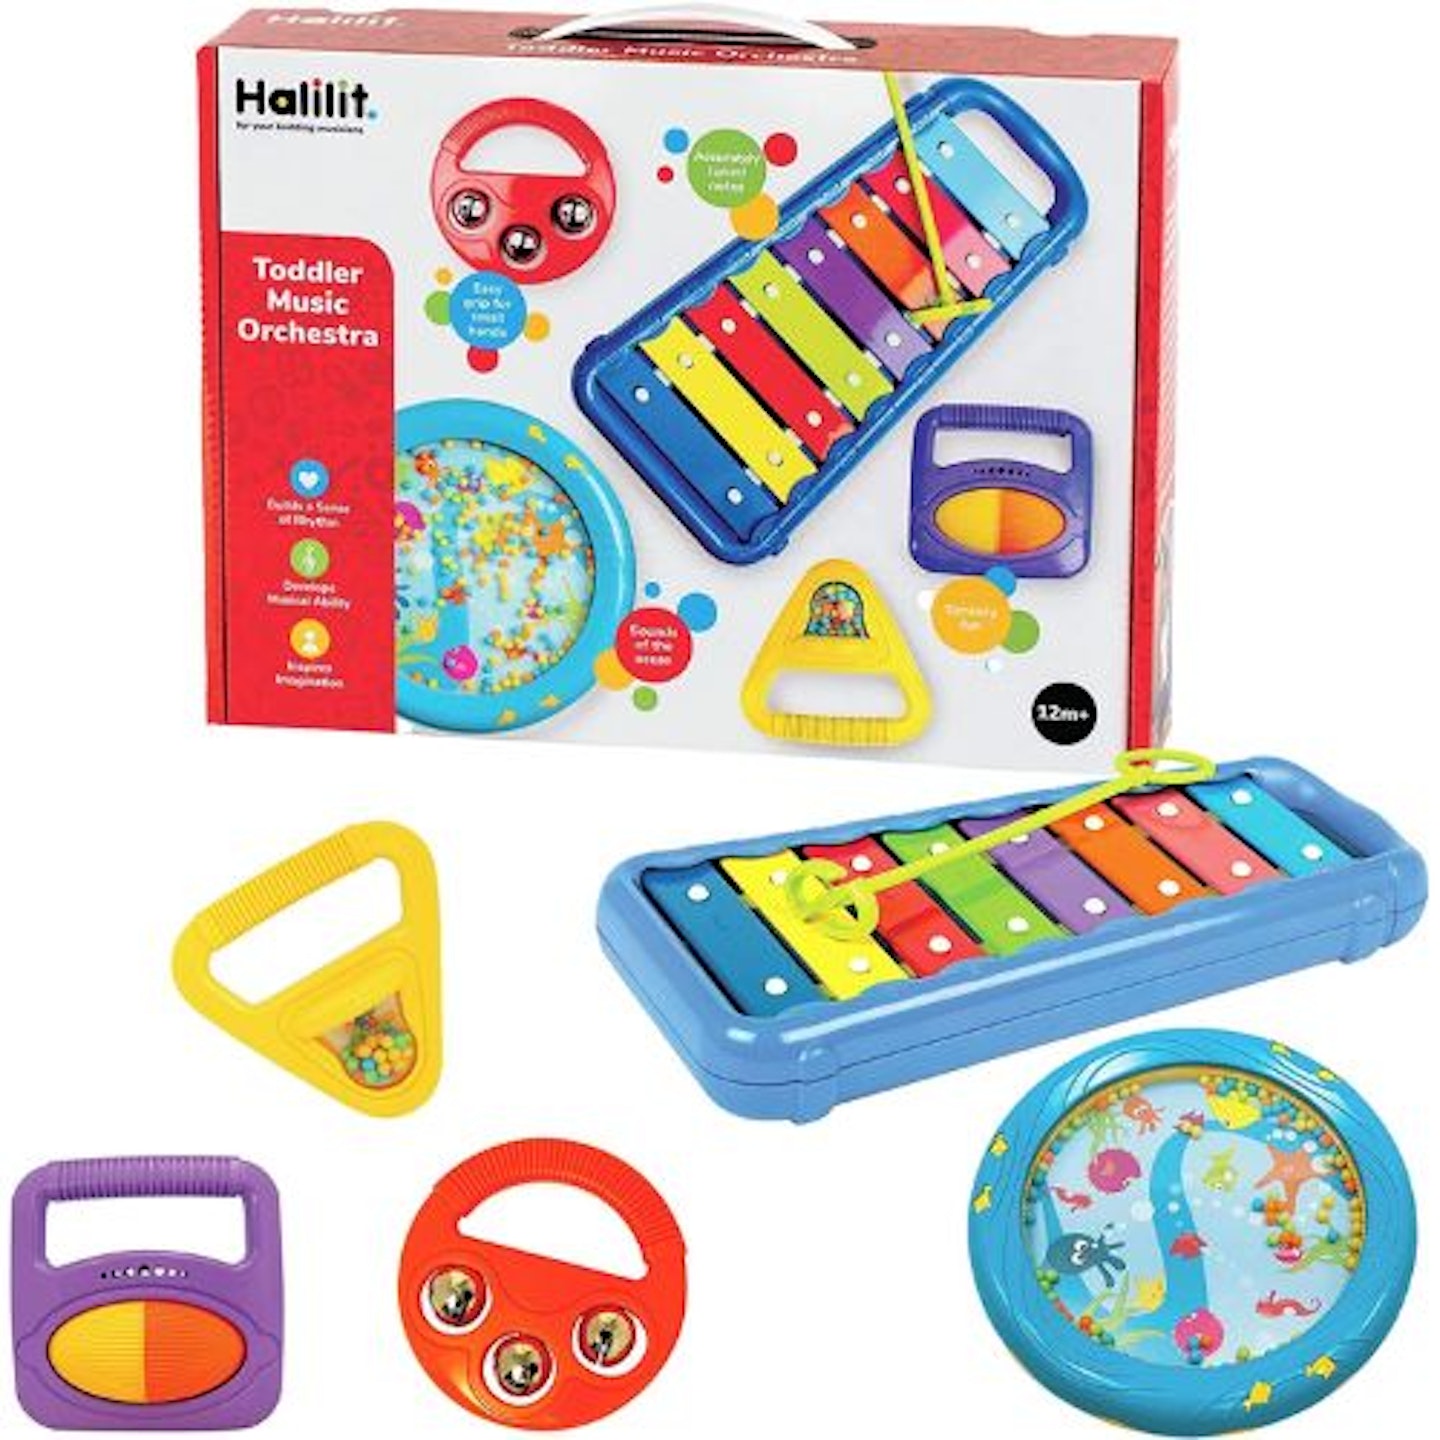 Halilit Toddler Music Orchestra Musical Instrument Gift Set